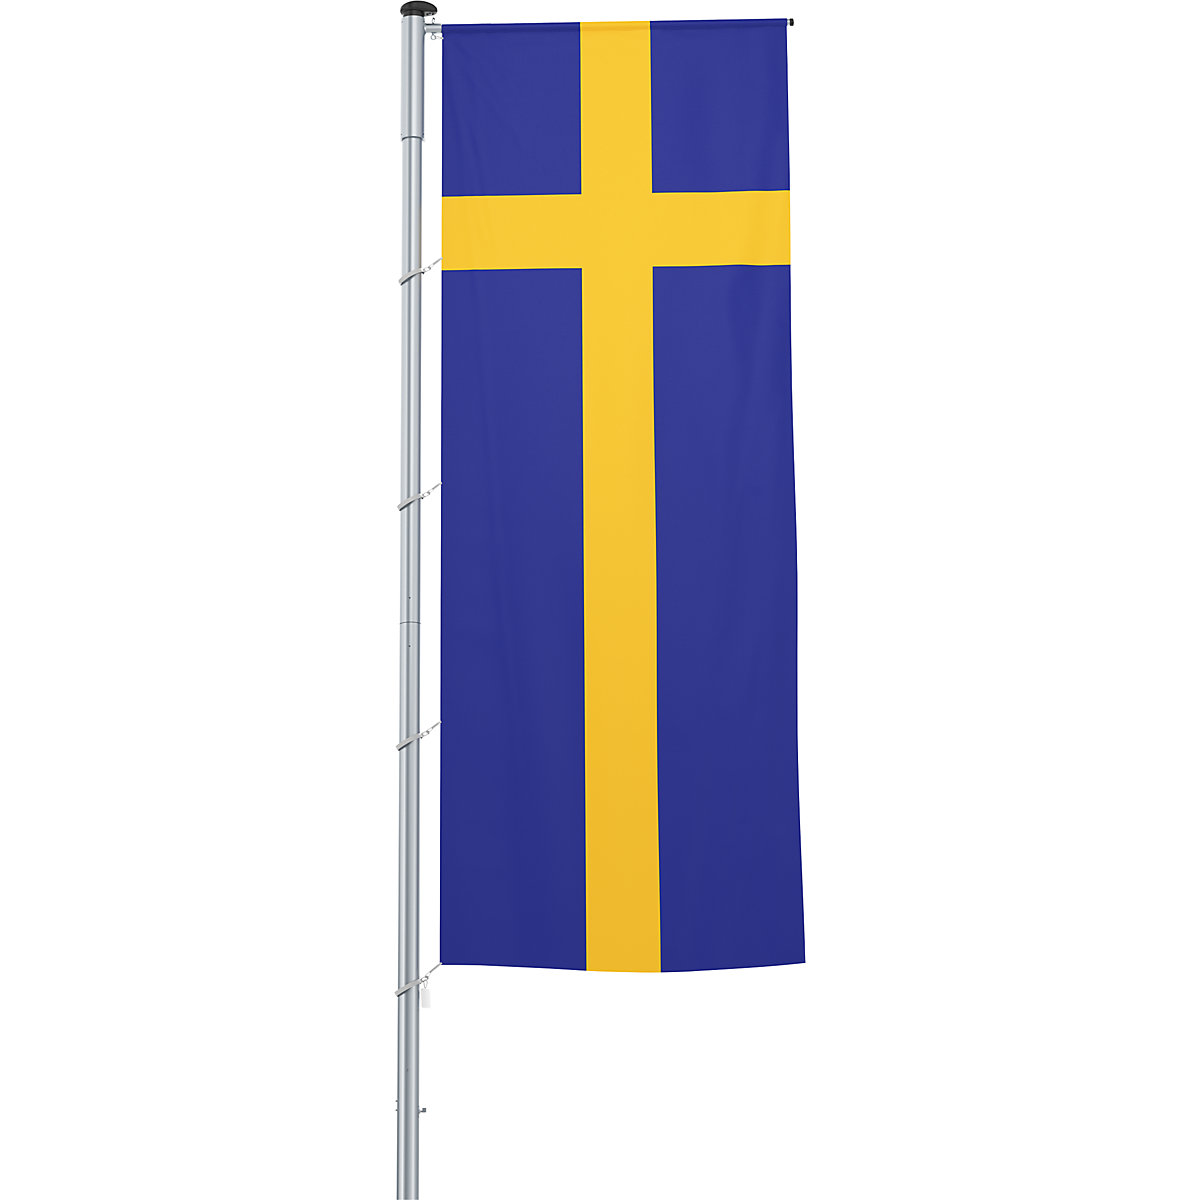 Steag pentru braț/drapel național – Mannus, format 1,2 x 3 m, Suedia-31